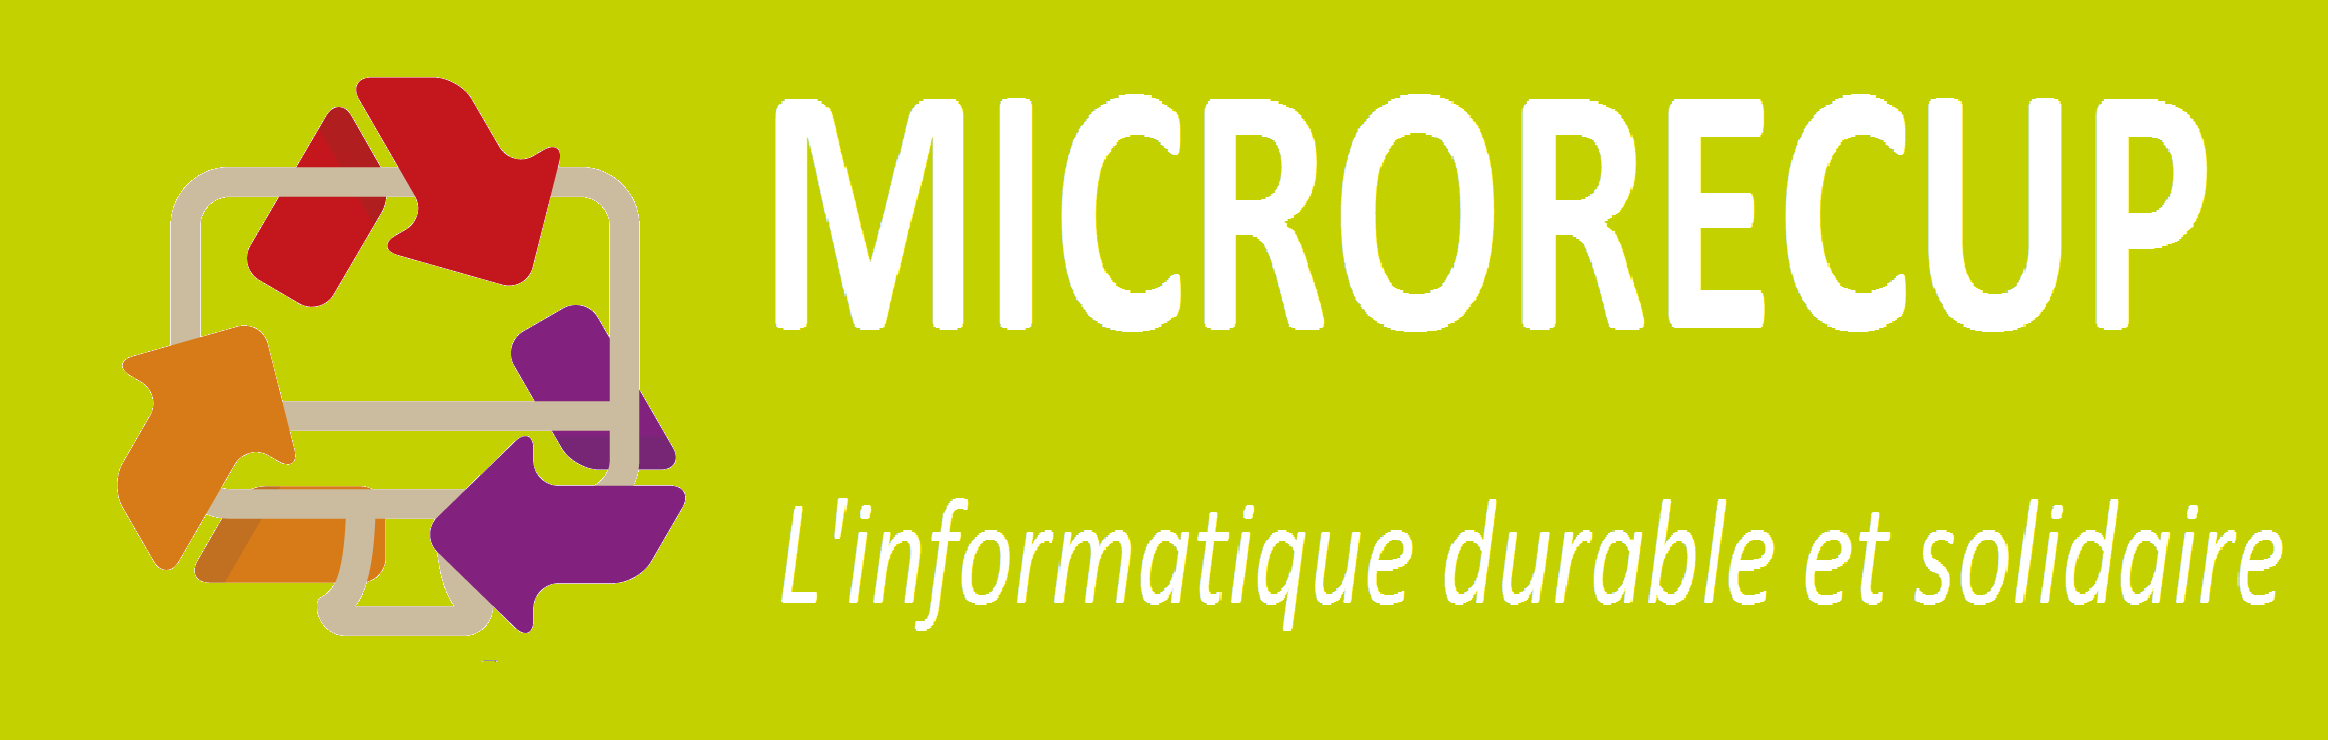 Microrecup